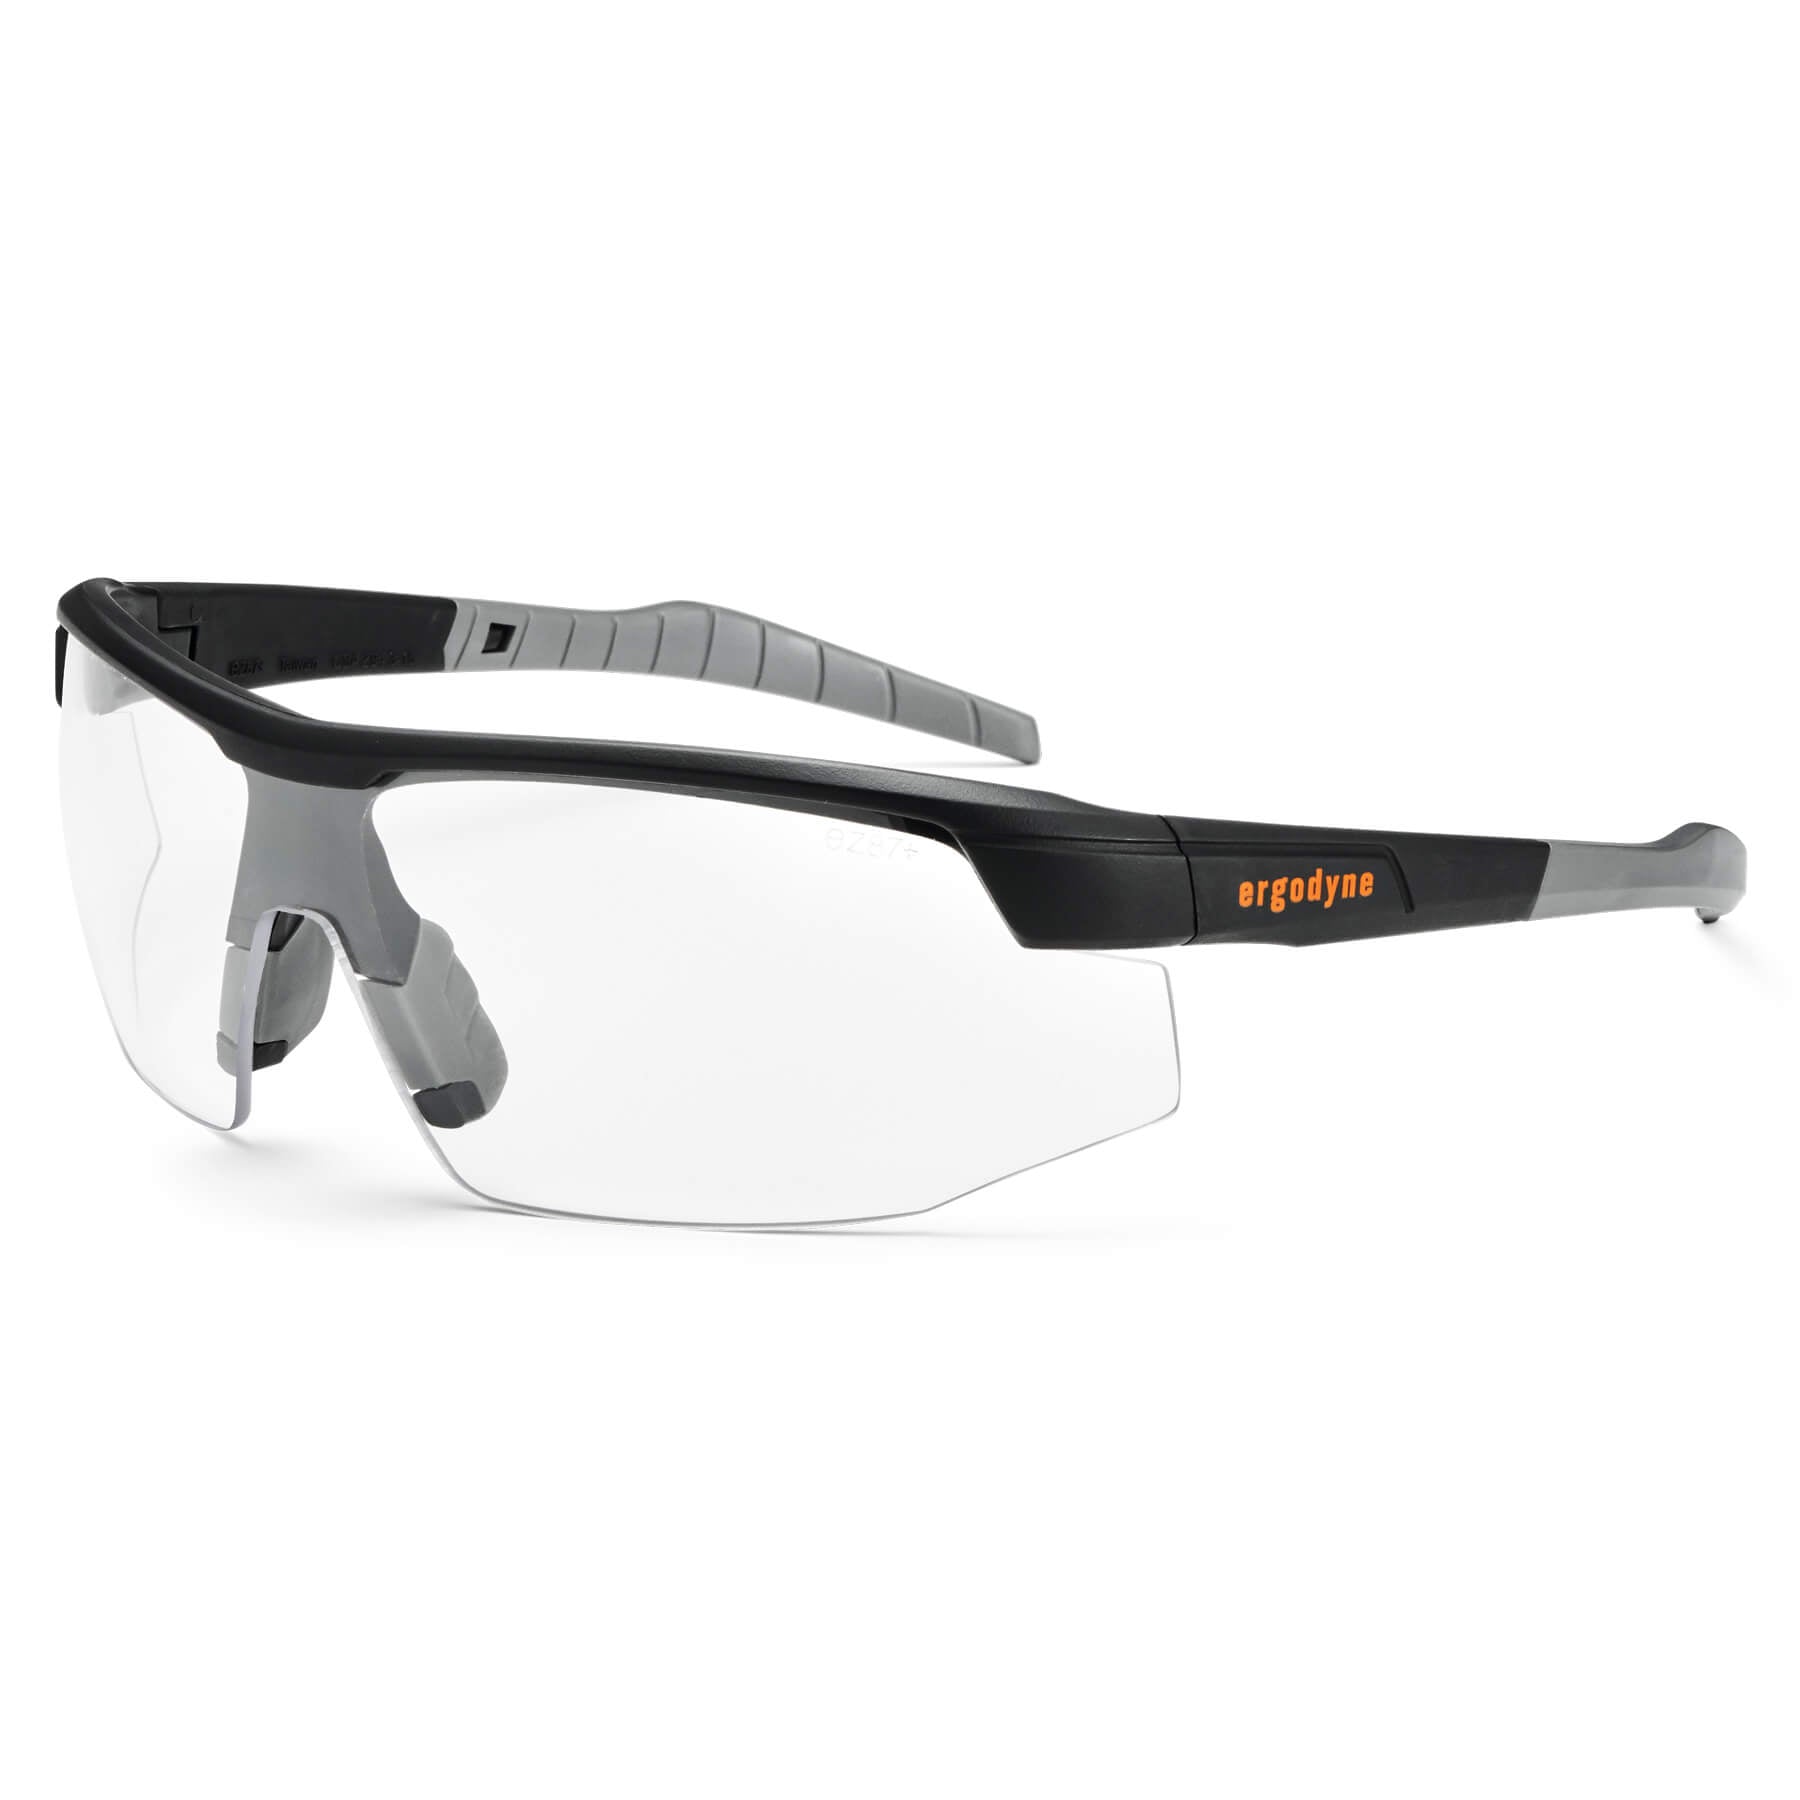 Skullerz Sköll Safety Glasses Anti-Fog Clear Lens